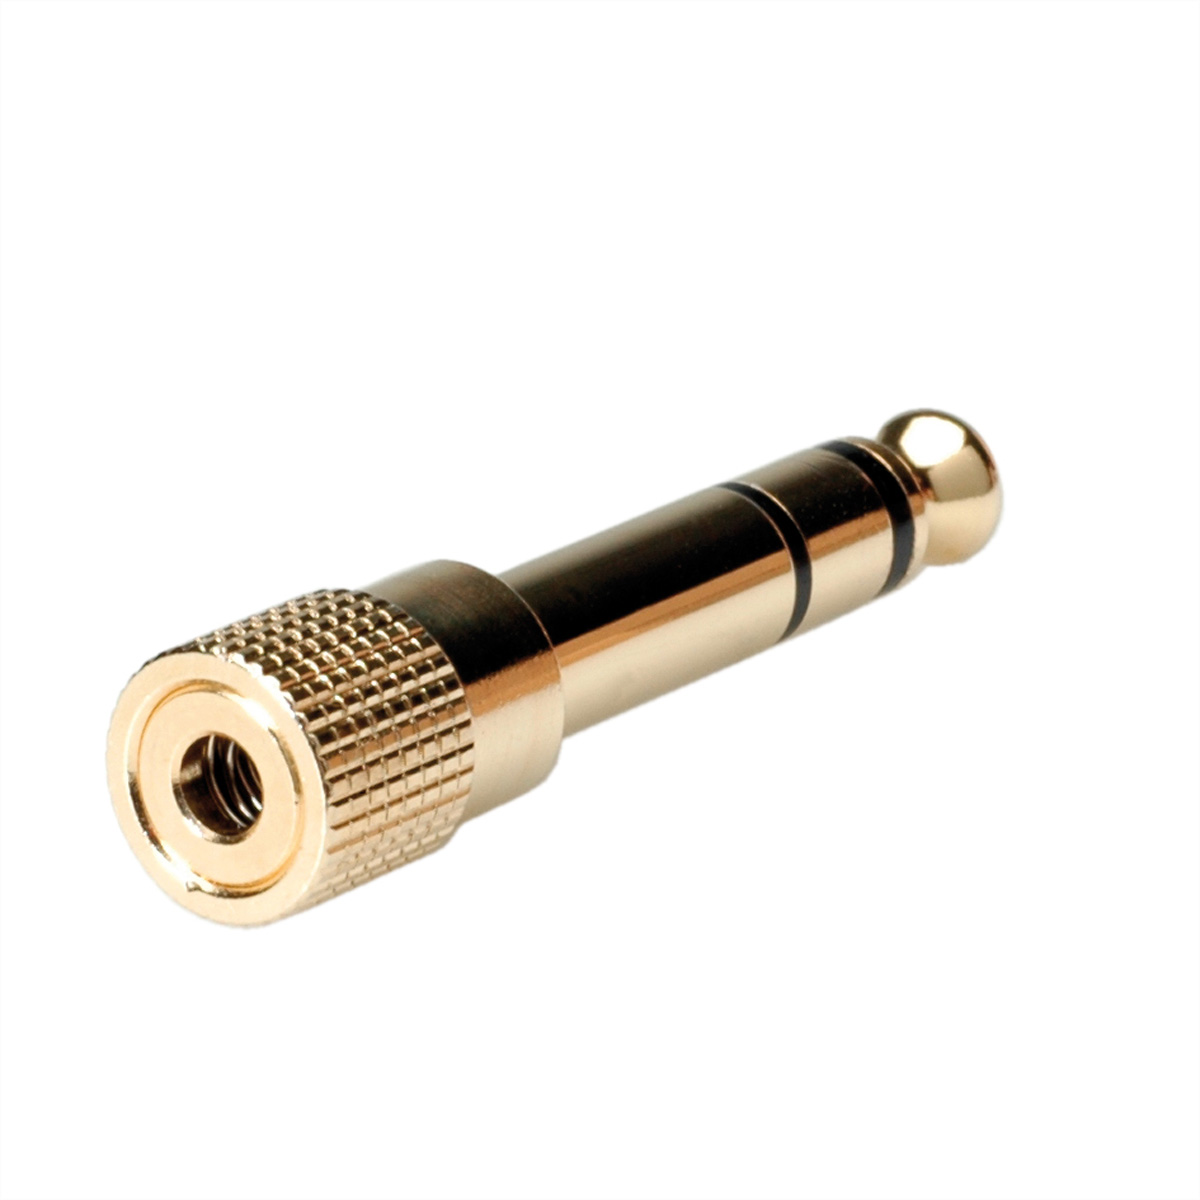 ROLINE GOLD Stereo Adapter mm 14 mm - Audio-Adapter, 3,5 6,35 Stecker mm Buchse